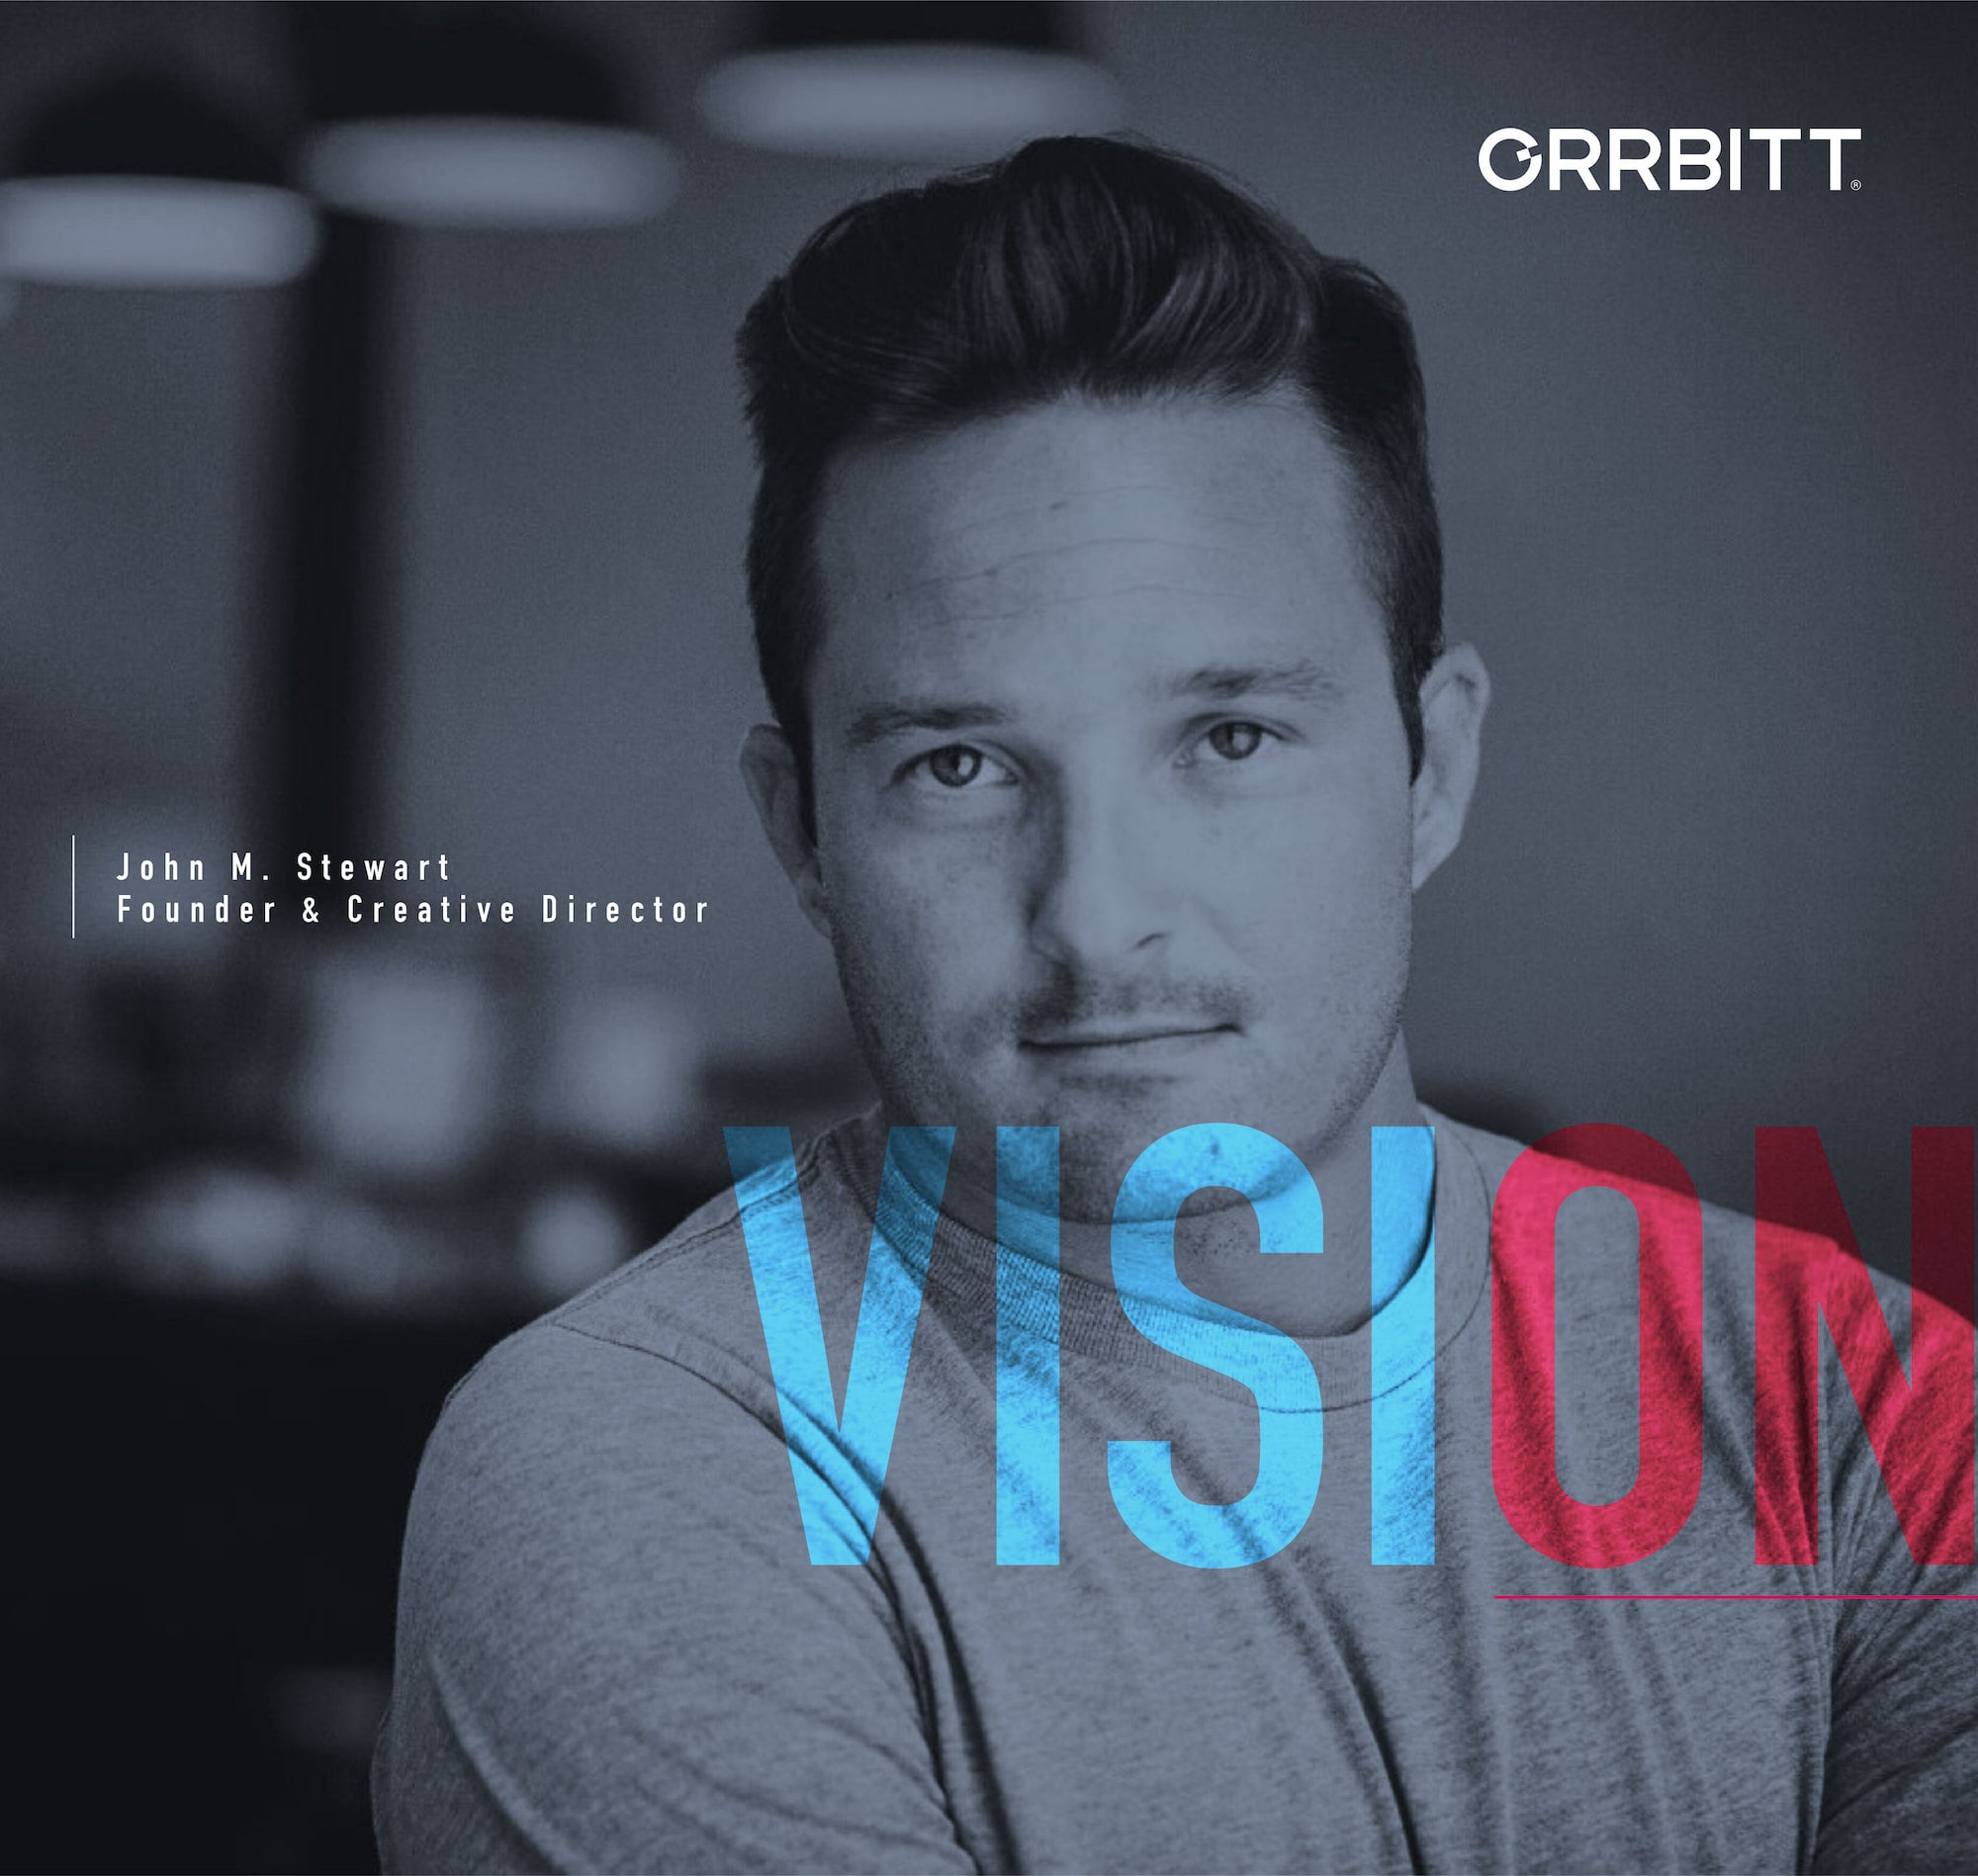 Photo of John M. Stewart, Founder and Creative Director at Orrbitt. Text "Vision" overlays headshot.